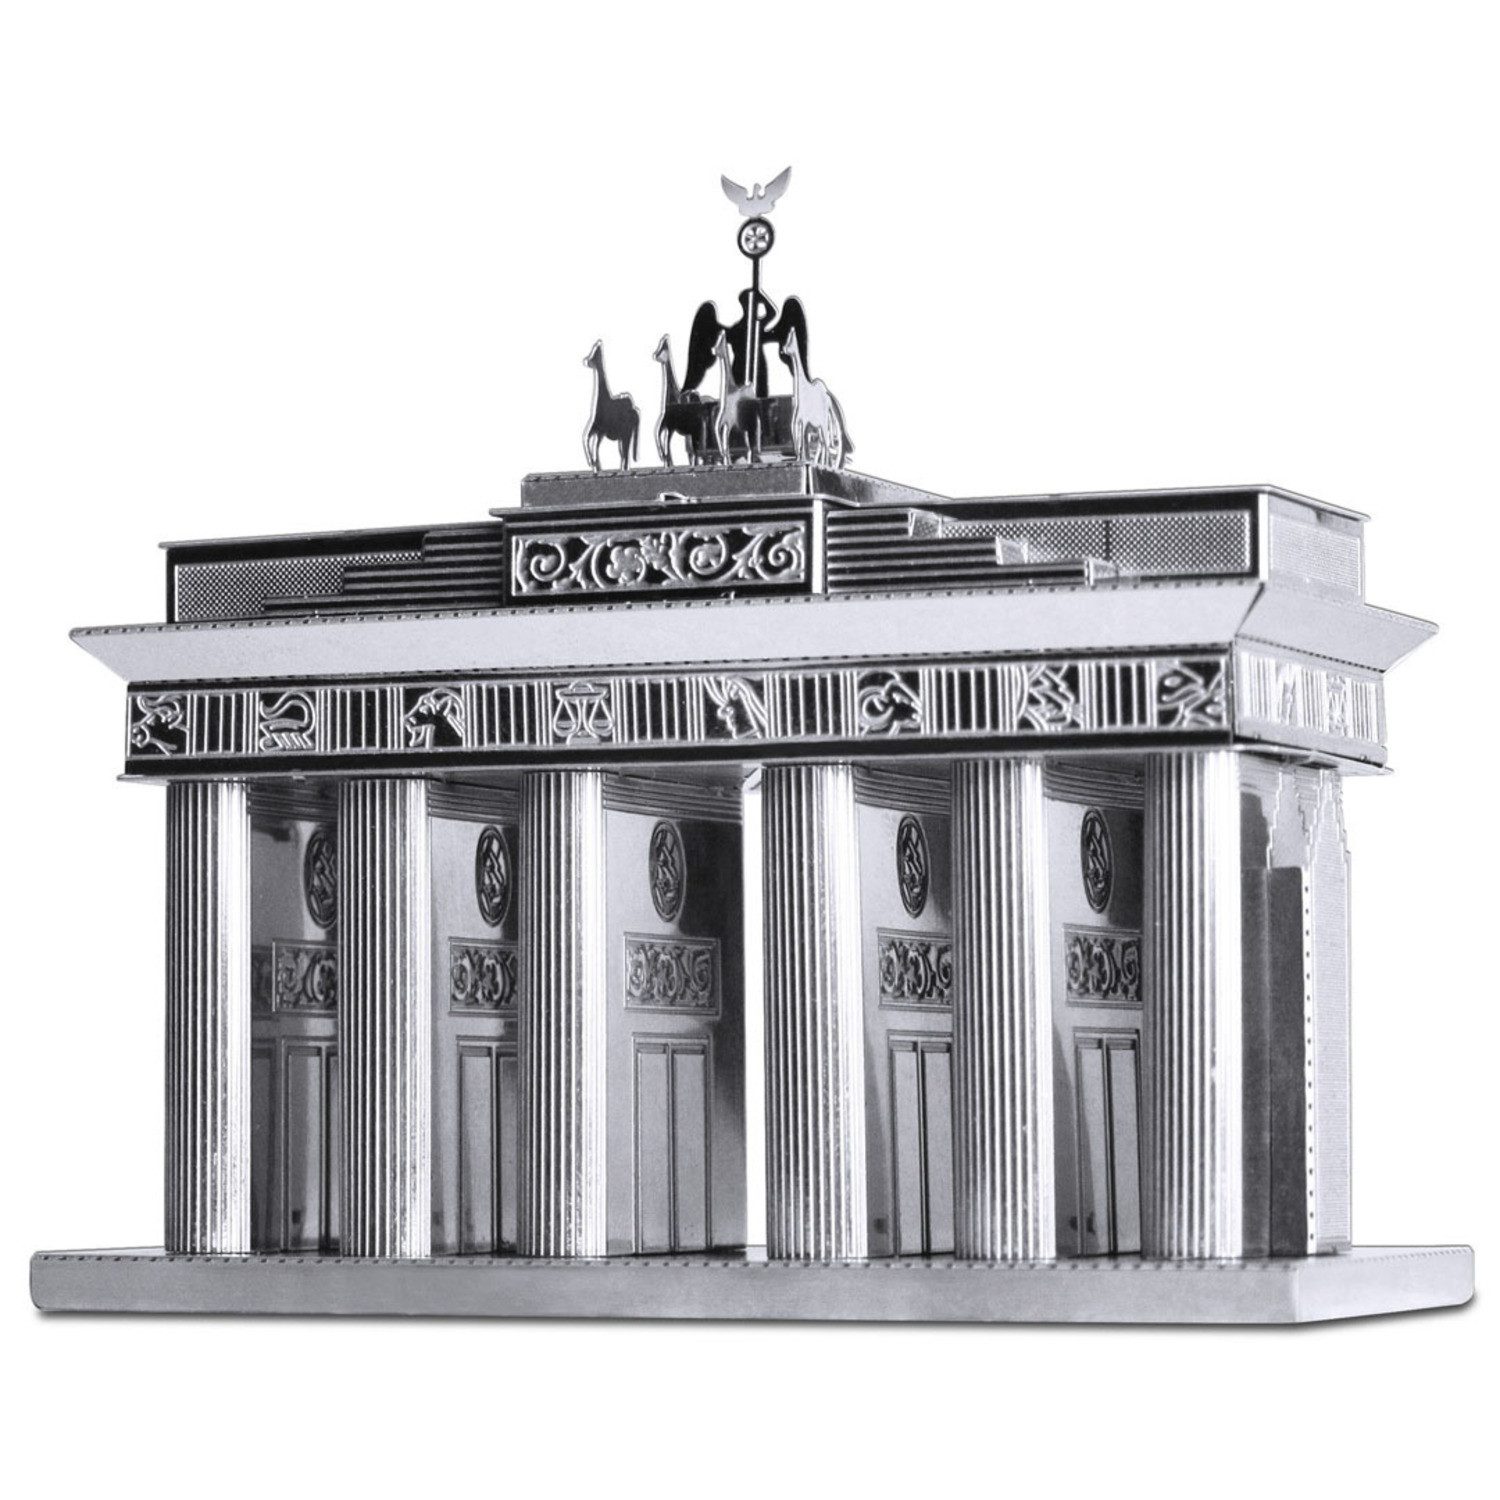 Invento Modellbausatz Brandenburger Tor 3D Modellbausatz aus Metall